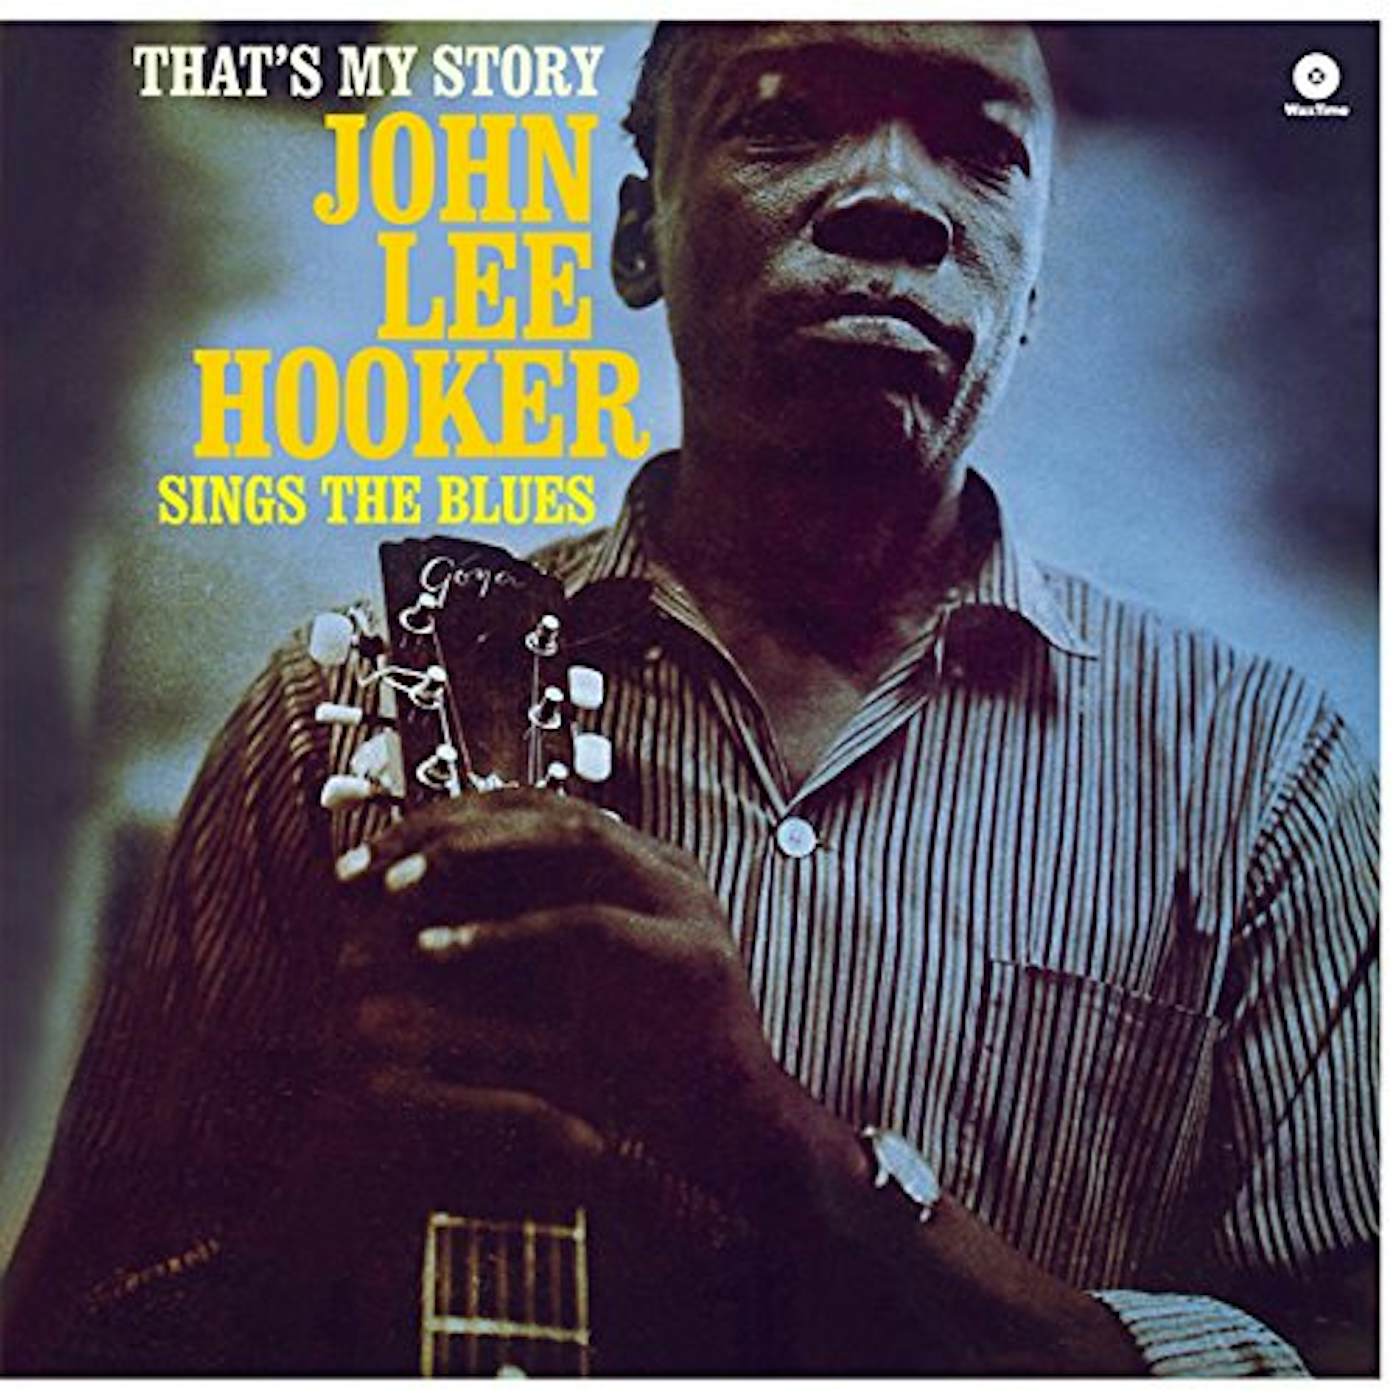 John Lee Hooker THAT'S MY STORY Vinyl Record - Spain Release